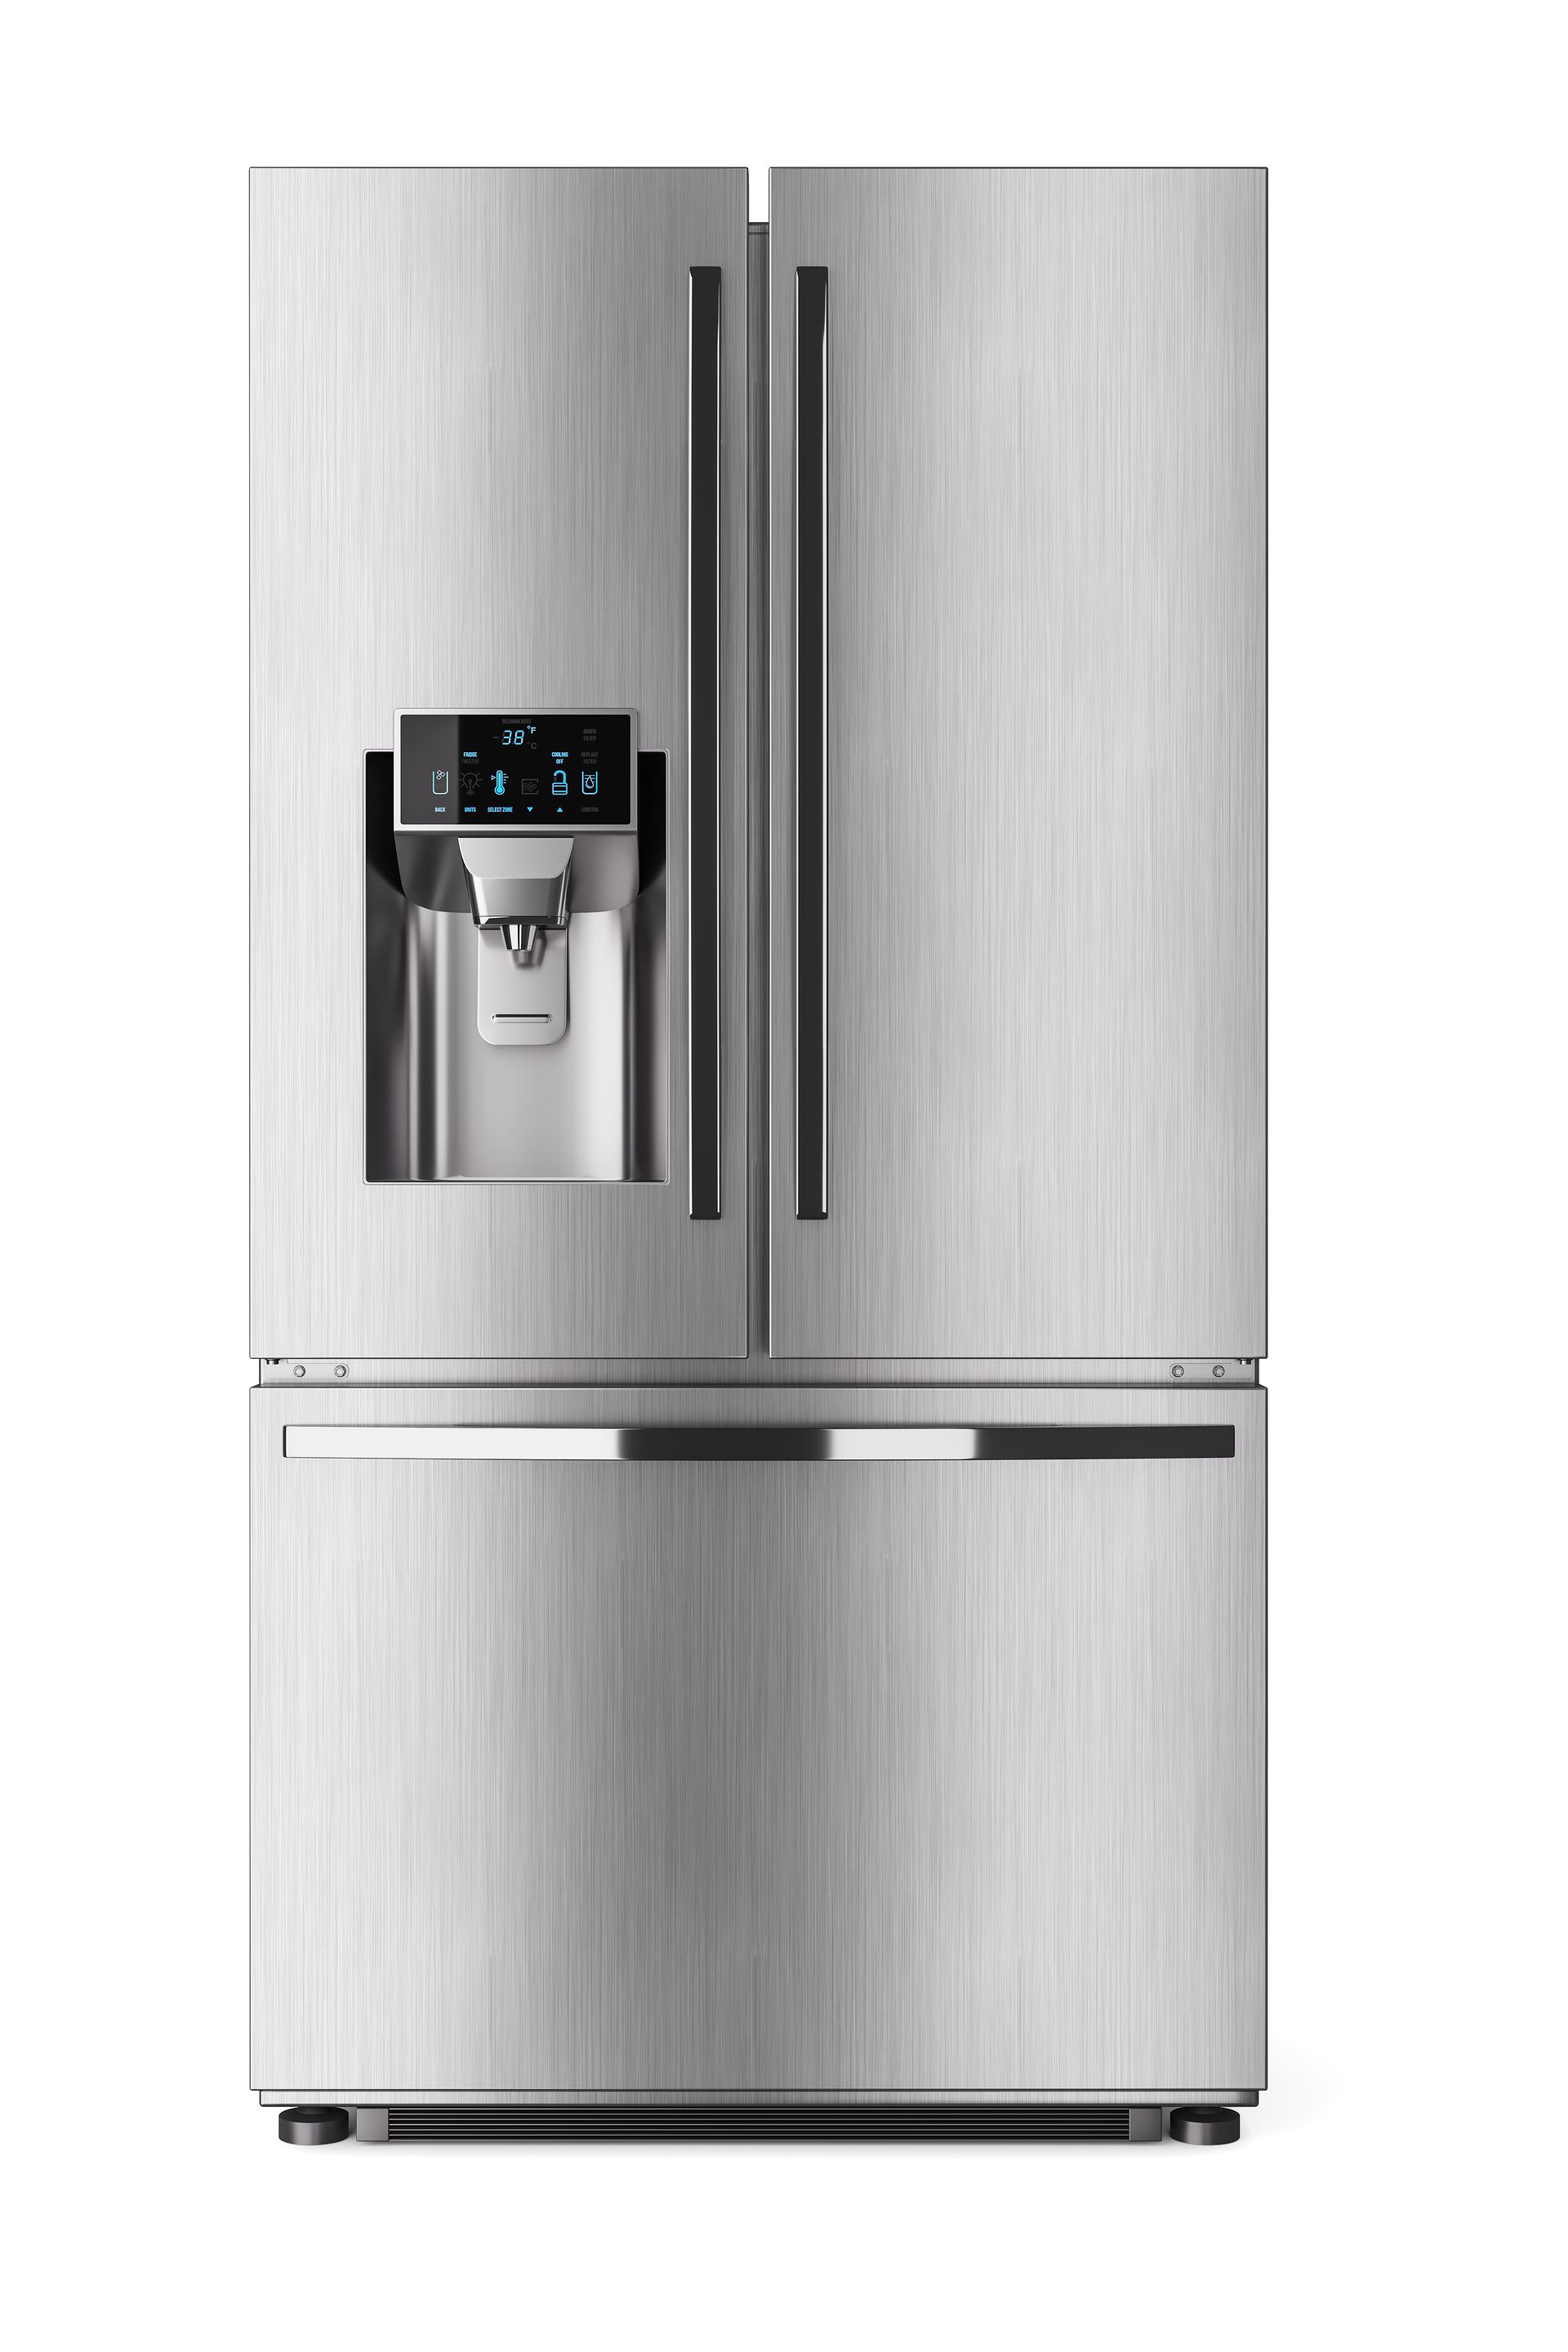 Refrigerators - Lancaster, PA - Frank Appliances Repair